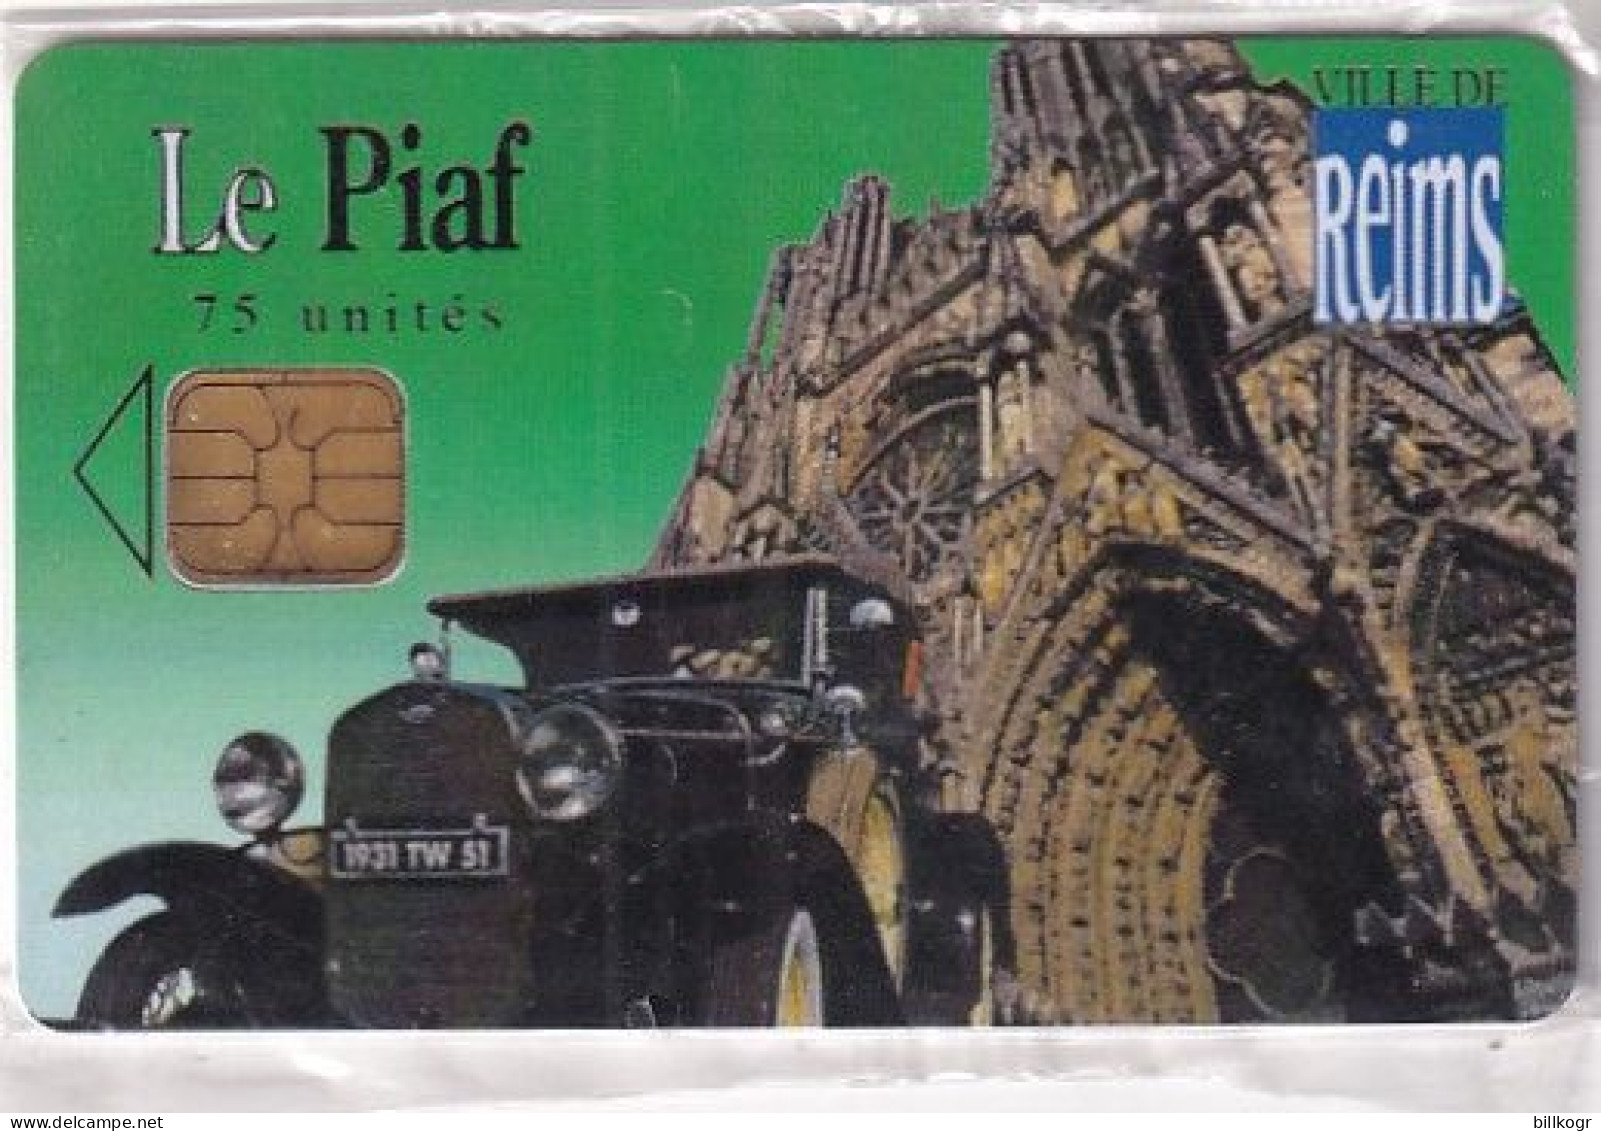 FRANCE - Le Piaf/Ville De Reims 75 Unites, Tirage 2800, 07/06, Mint - Scontrini Di Parcheggio